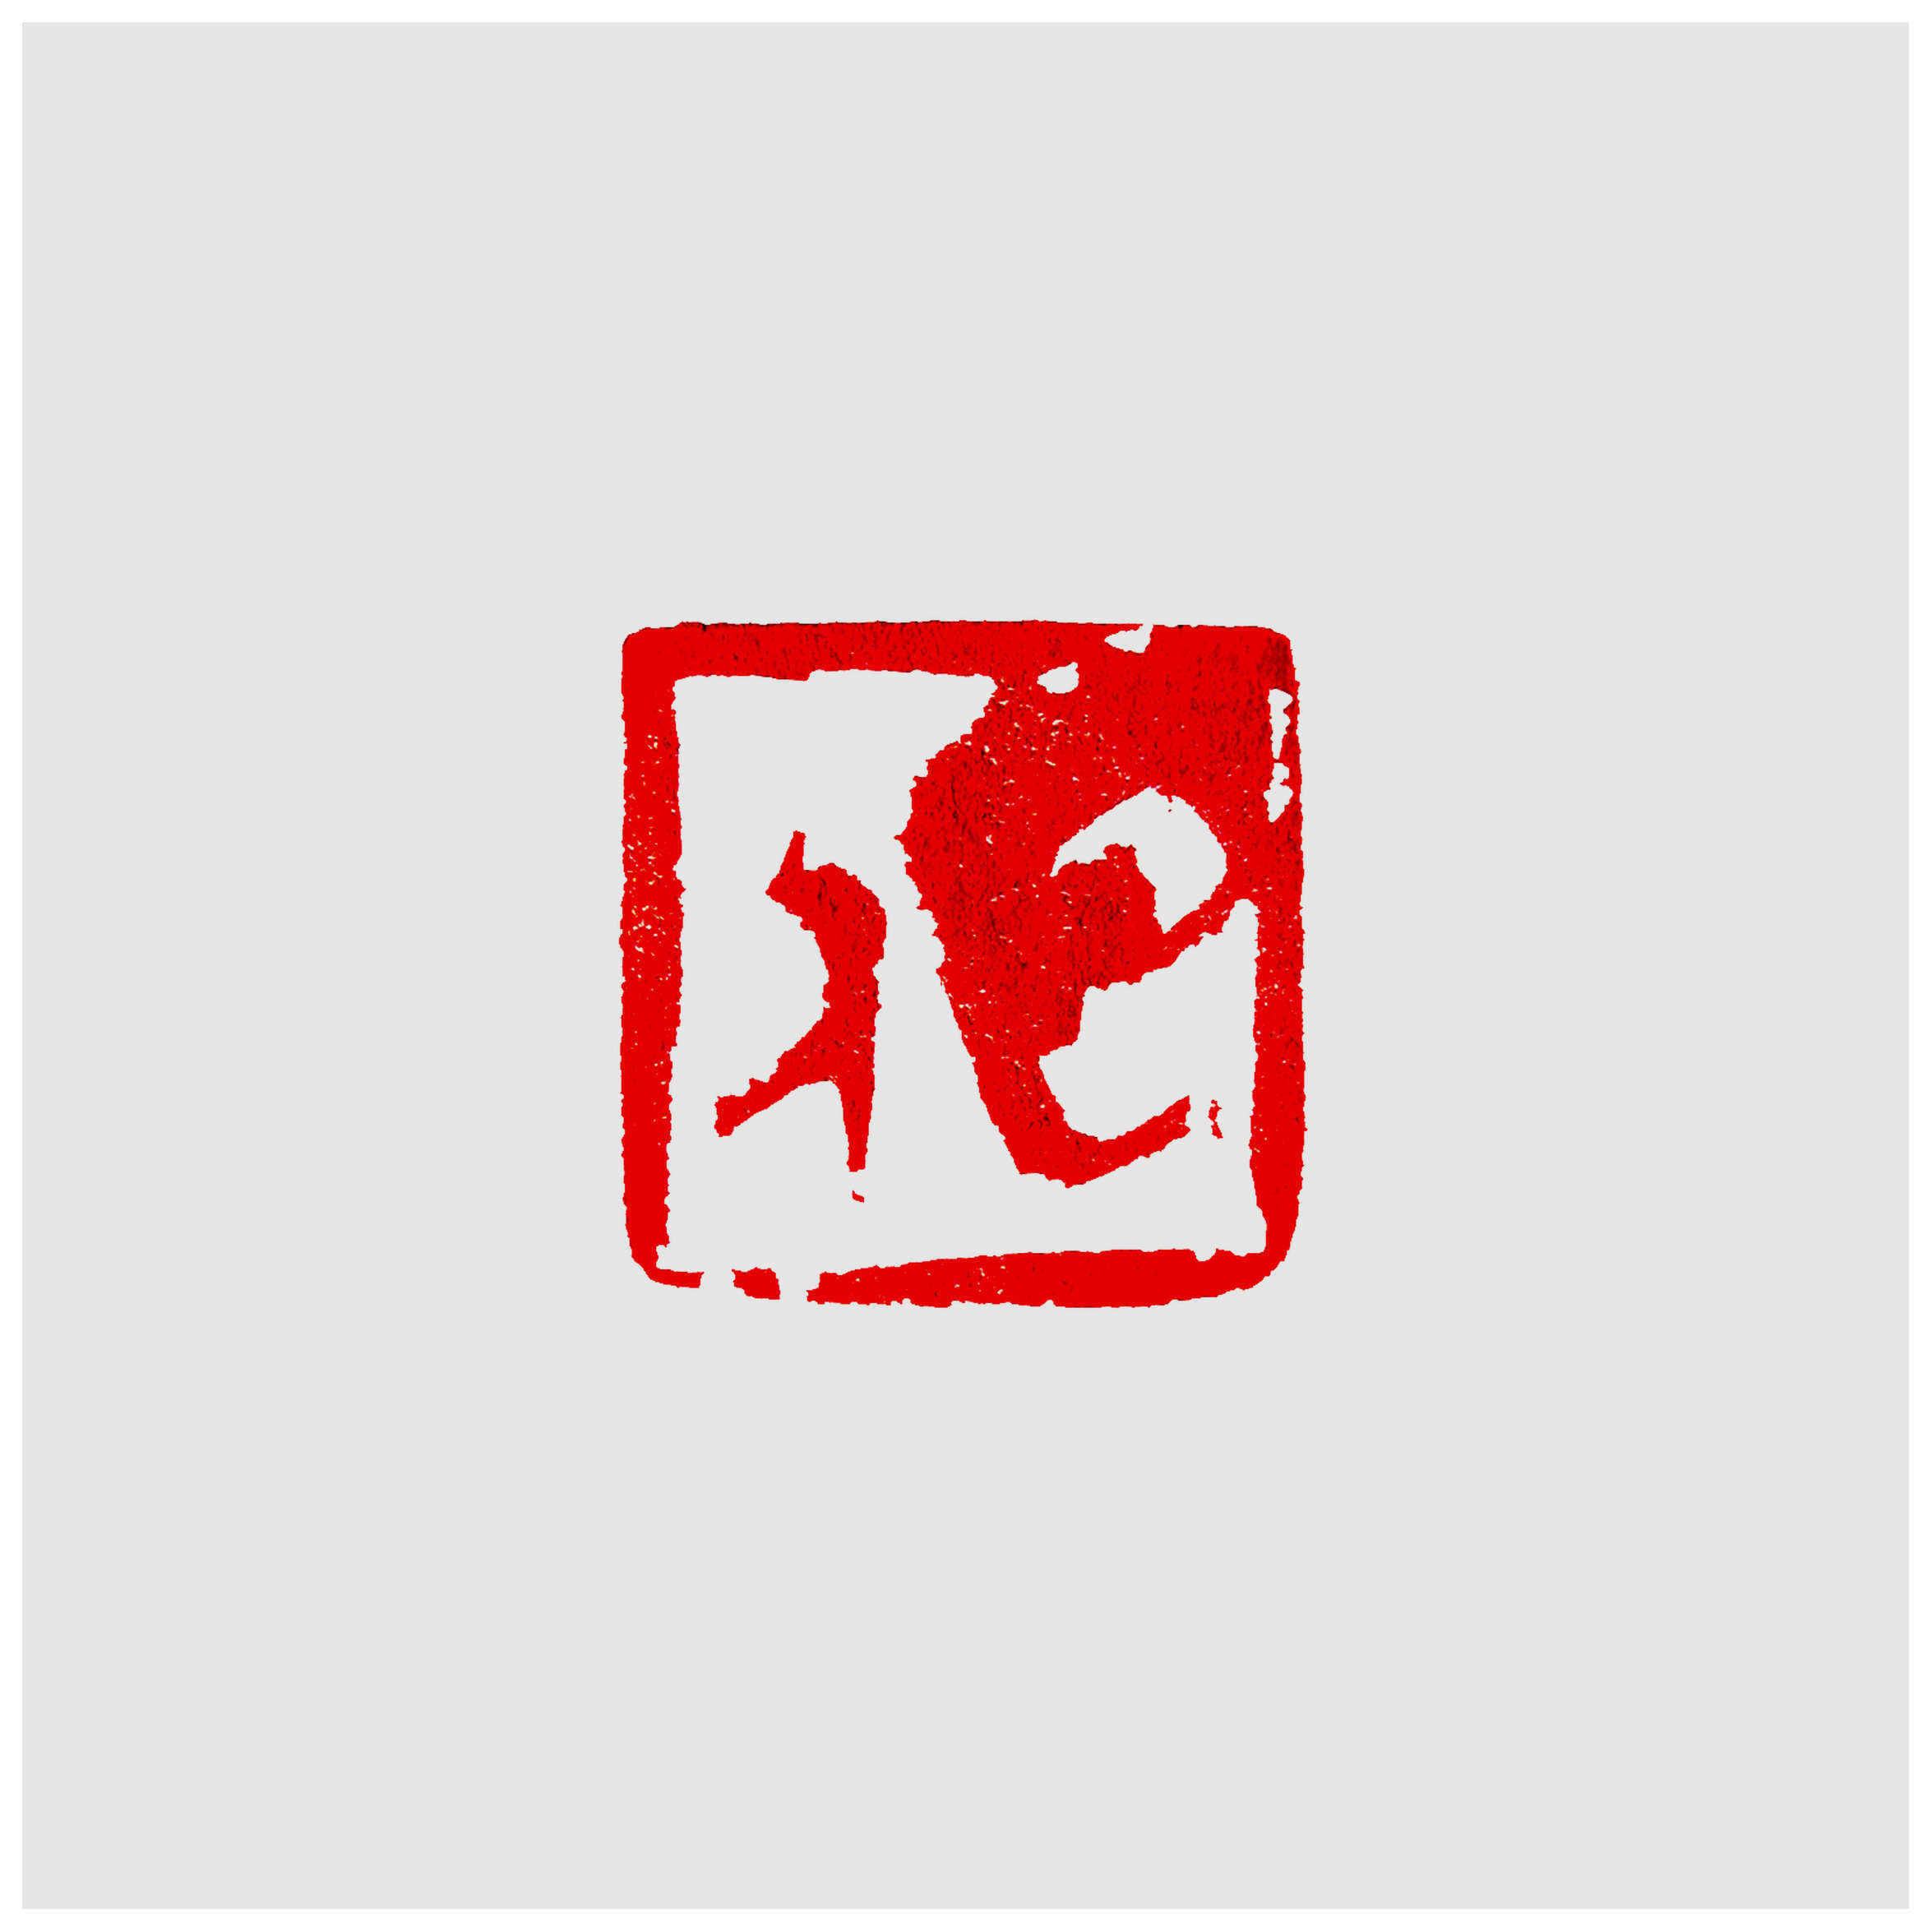 Qi Hong (Sai Koh) 's freehand brushwork style semi-seal script name seal carving (aka Chinese seal engraving, seal cutting) imprint: Iwasaki Hajinn, 40×40mm, stone